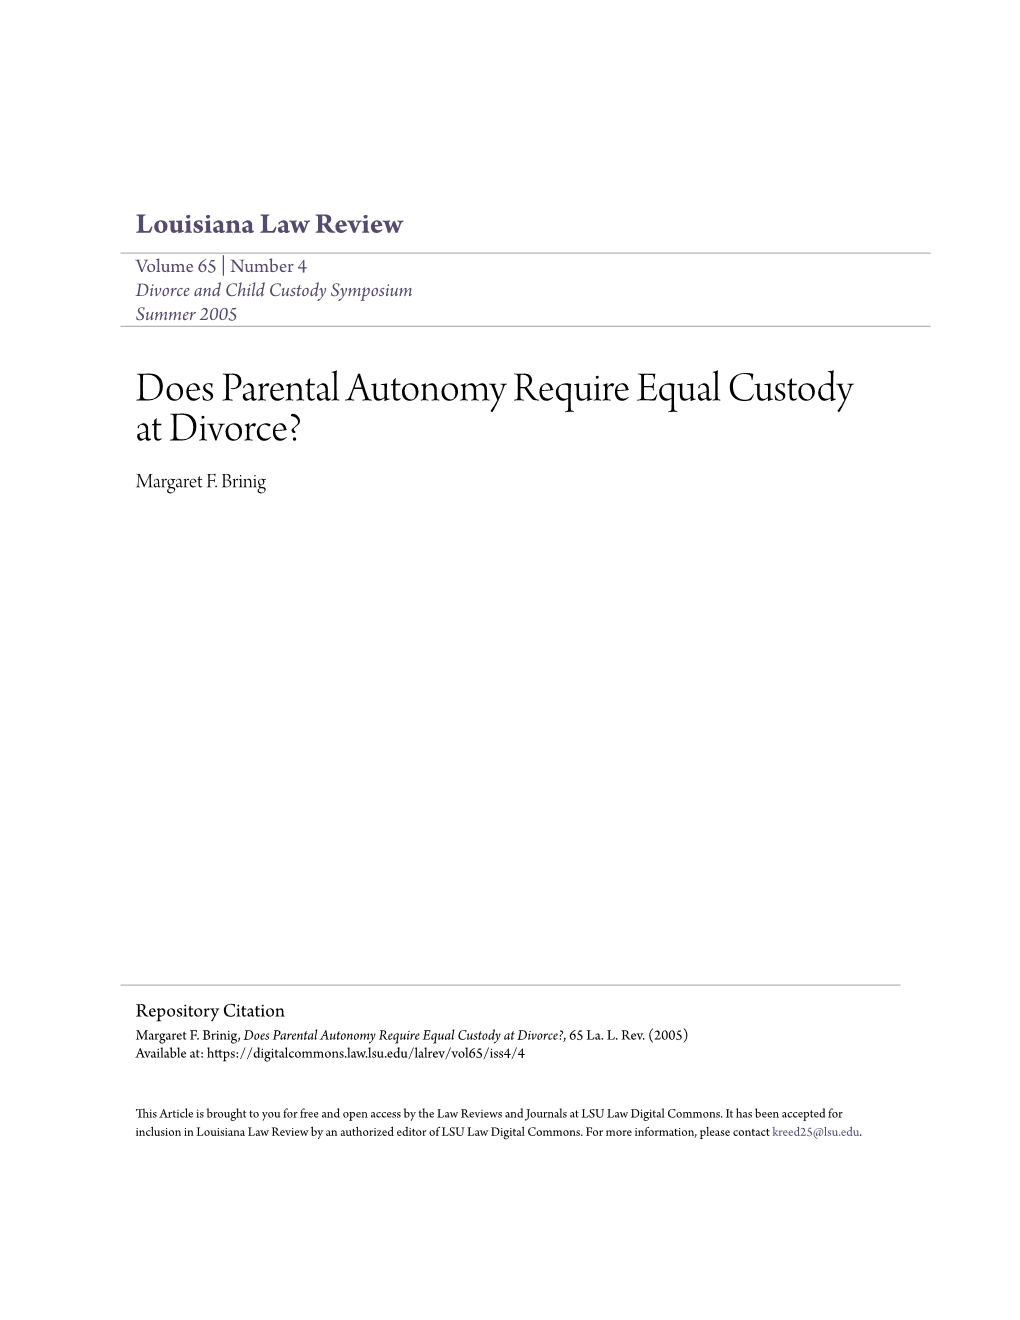 Does Parental Autonomy Require Equal Custody at Divorce? Margaret F